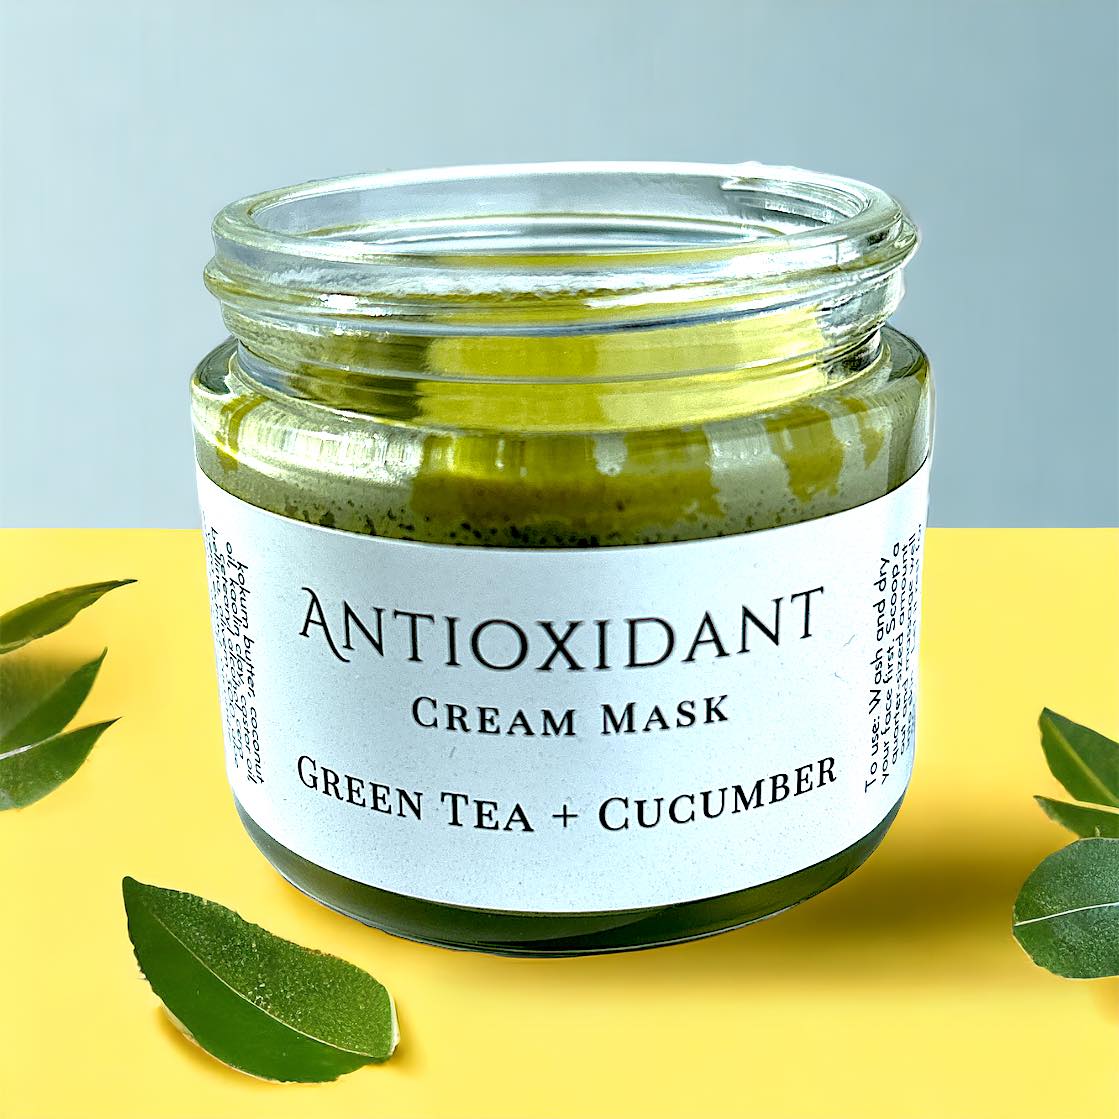 Green Tea and Cucumber Cream Mask for sensitive skin